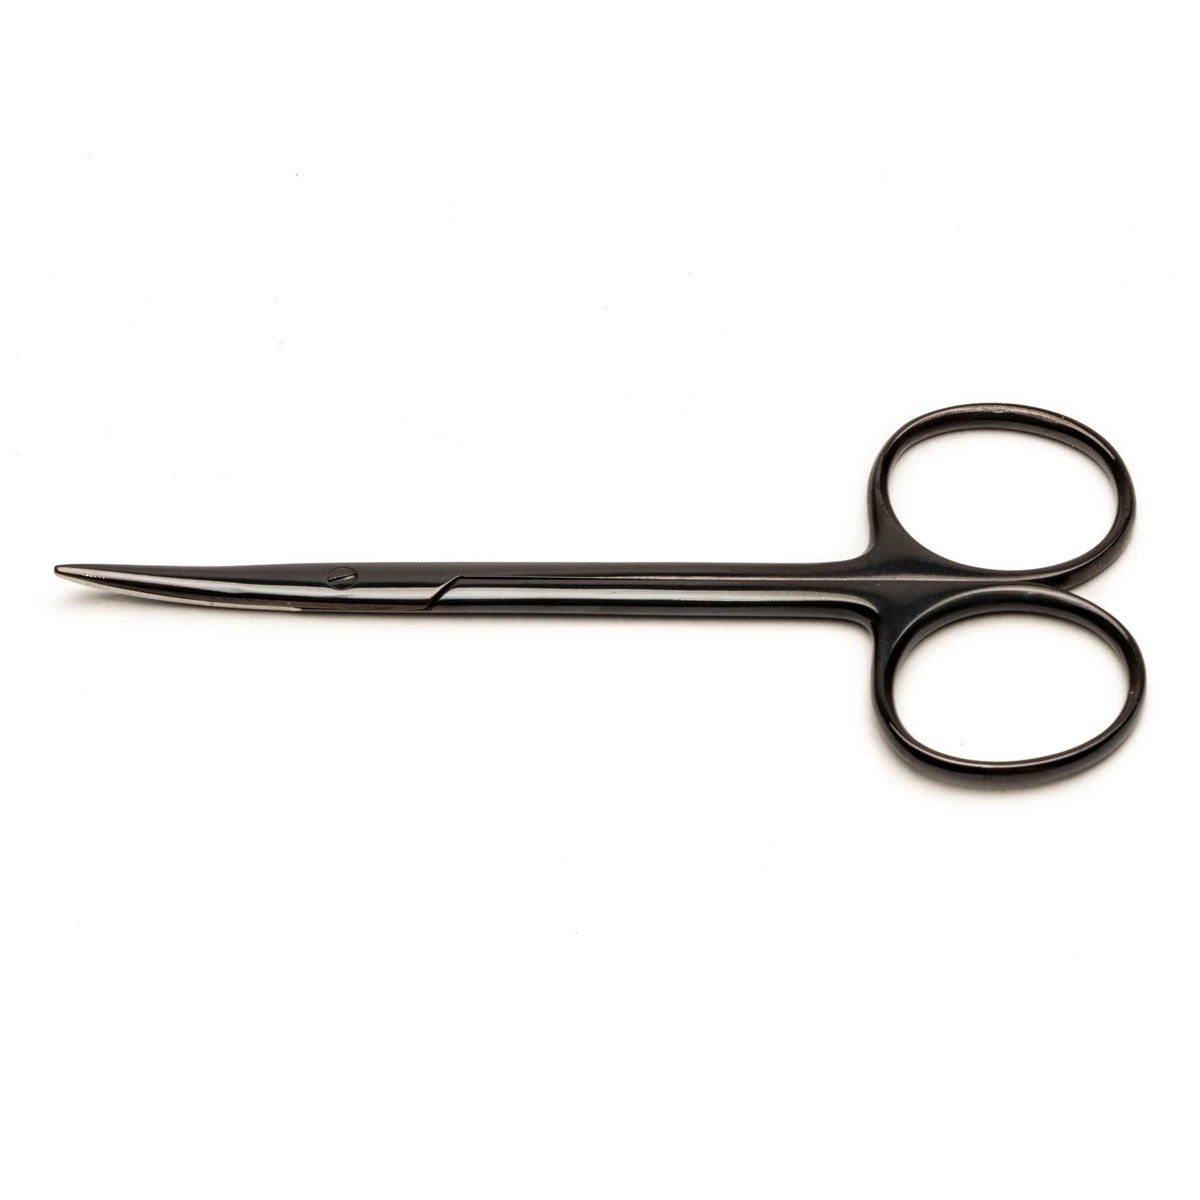 Starbismus scissors, 12 cm, Straight, Black, Round Tips